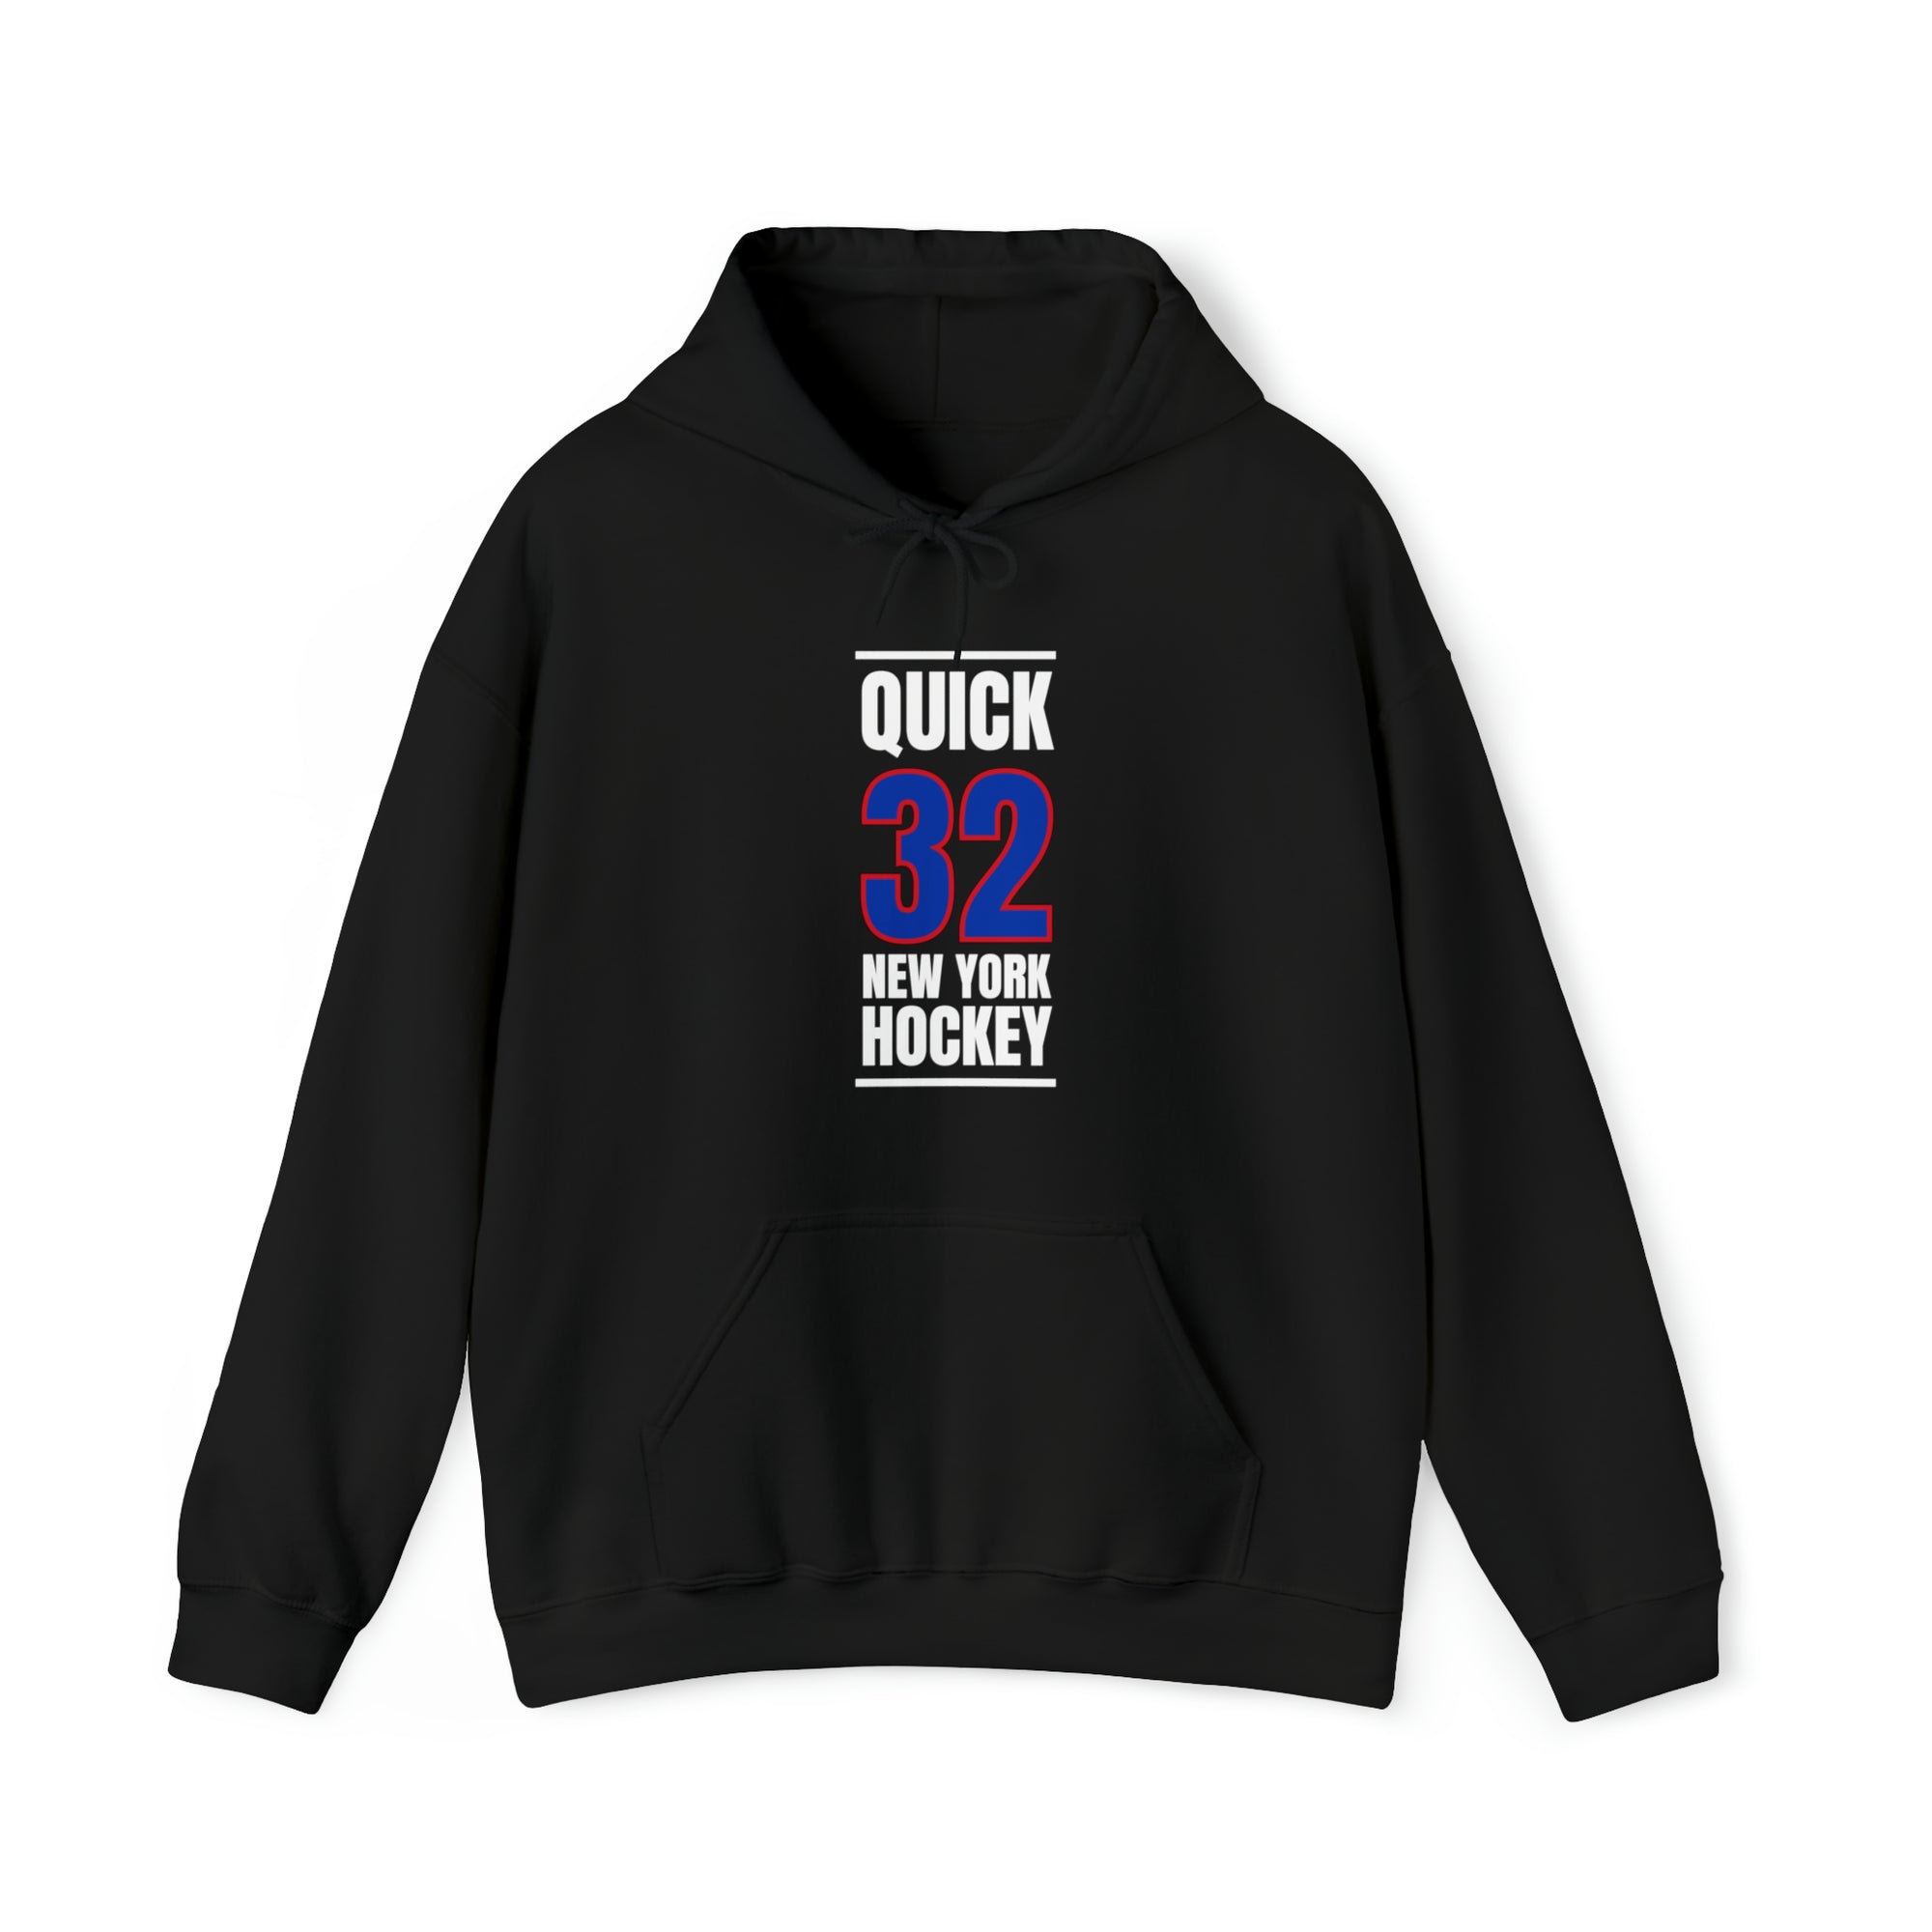 Quick 32 New York Hockey Royal Blue Vertical Design Unisex Hooded Sweatshirt